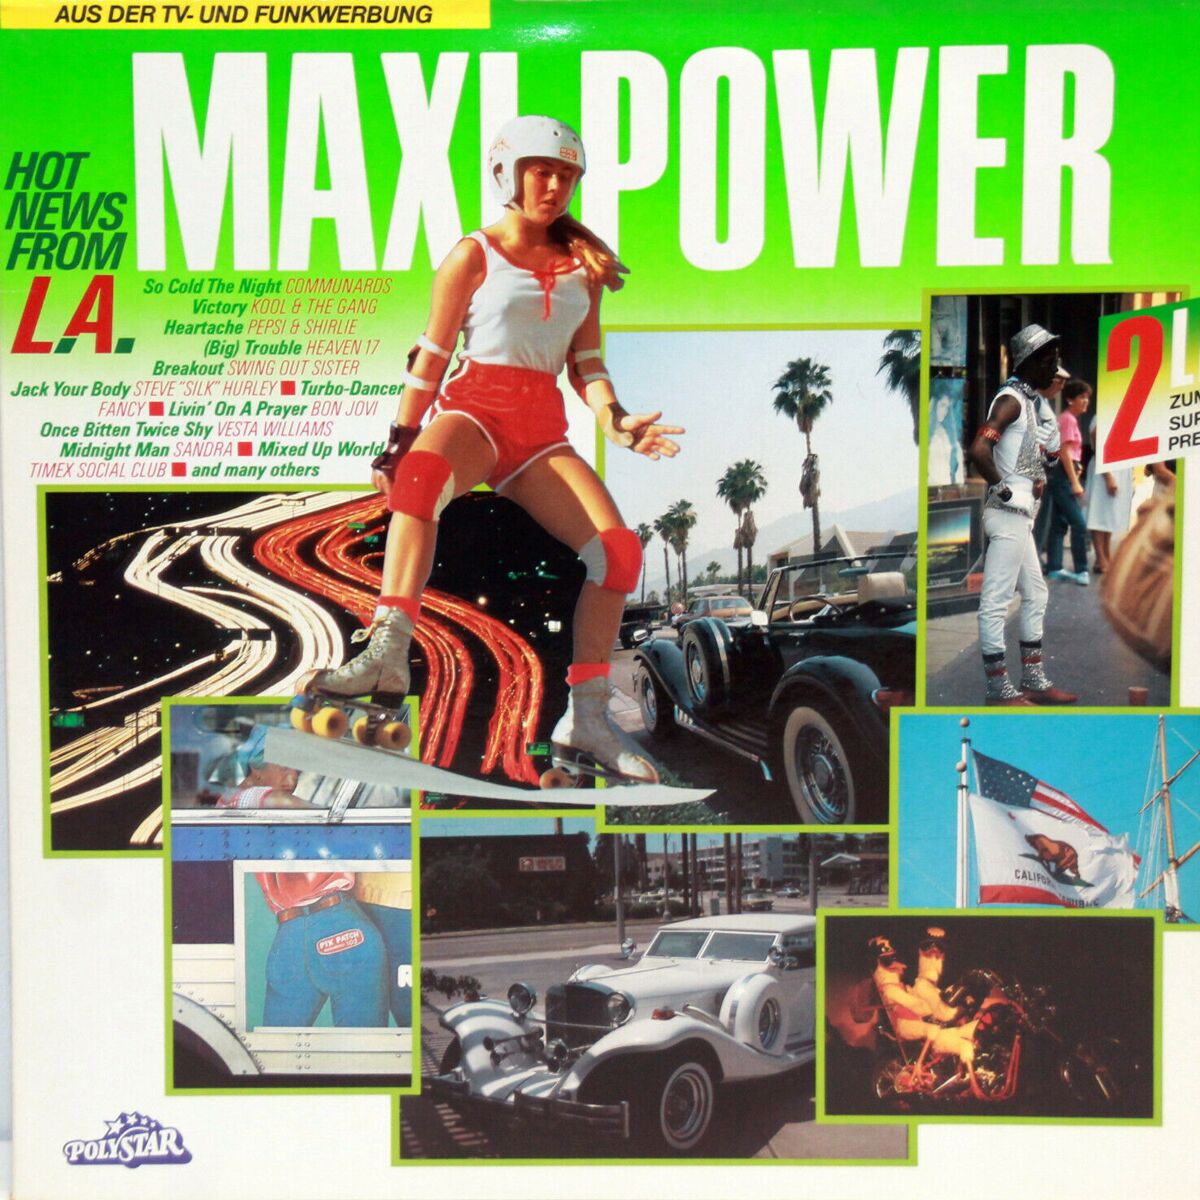 Maxi power